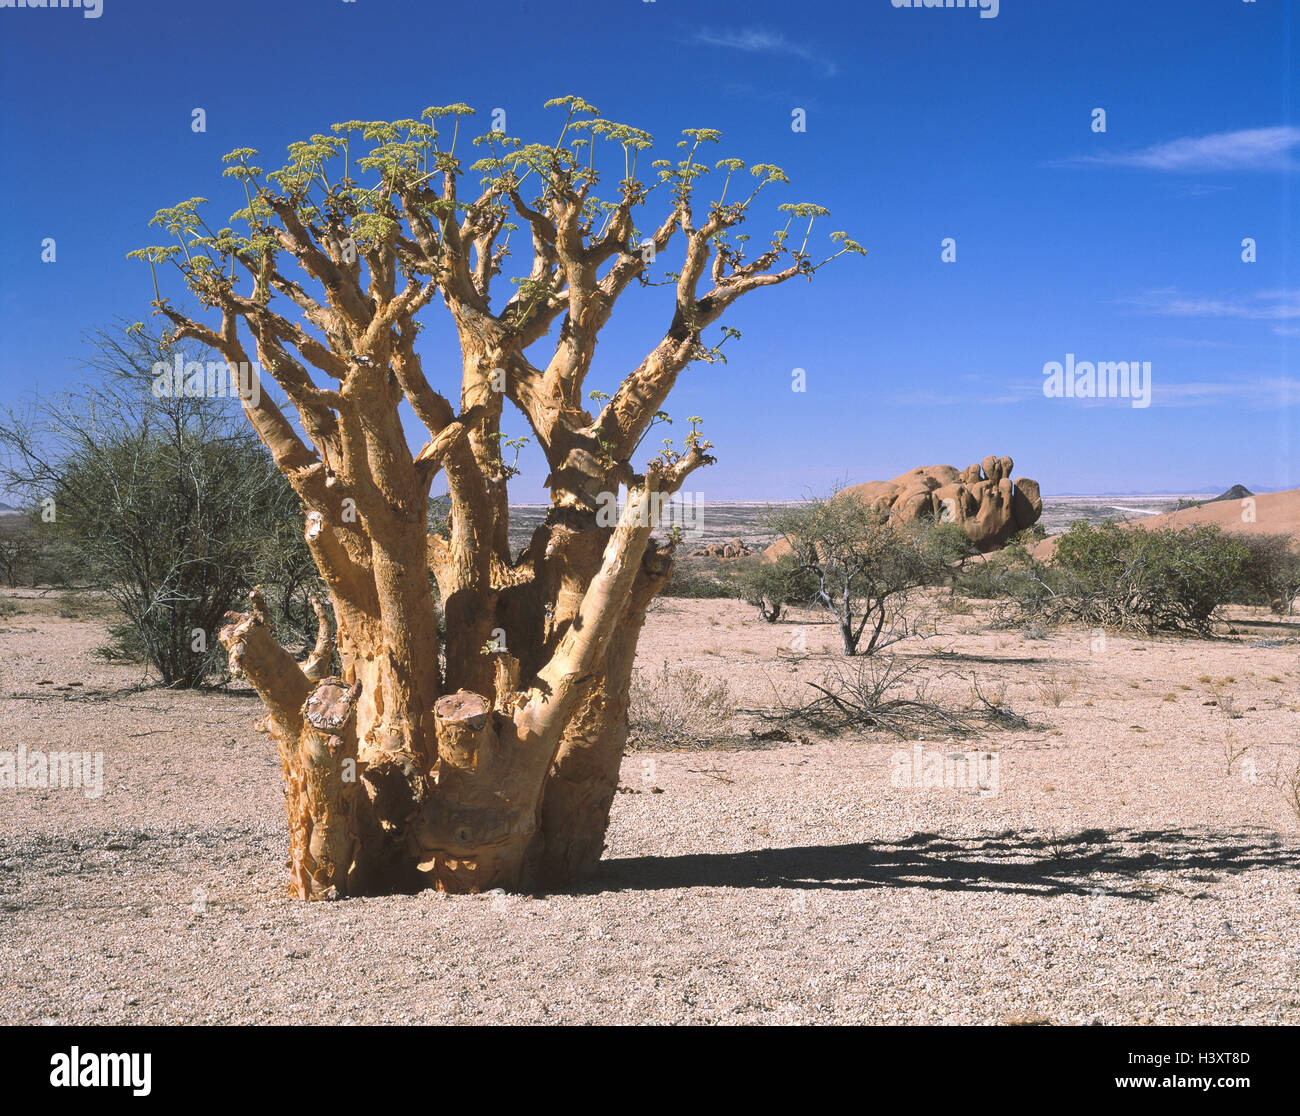 Namibia, scenery, butter tree, Cyphostemma currorii, Africa, desert, heat, dryness, vegetation, meagerly, scanty, tree, shrub, shrubs, savanna, nature, life-hostilely, Stock Photo